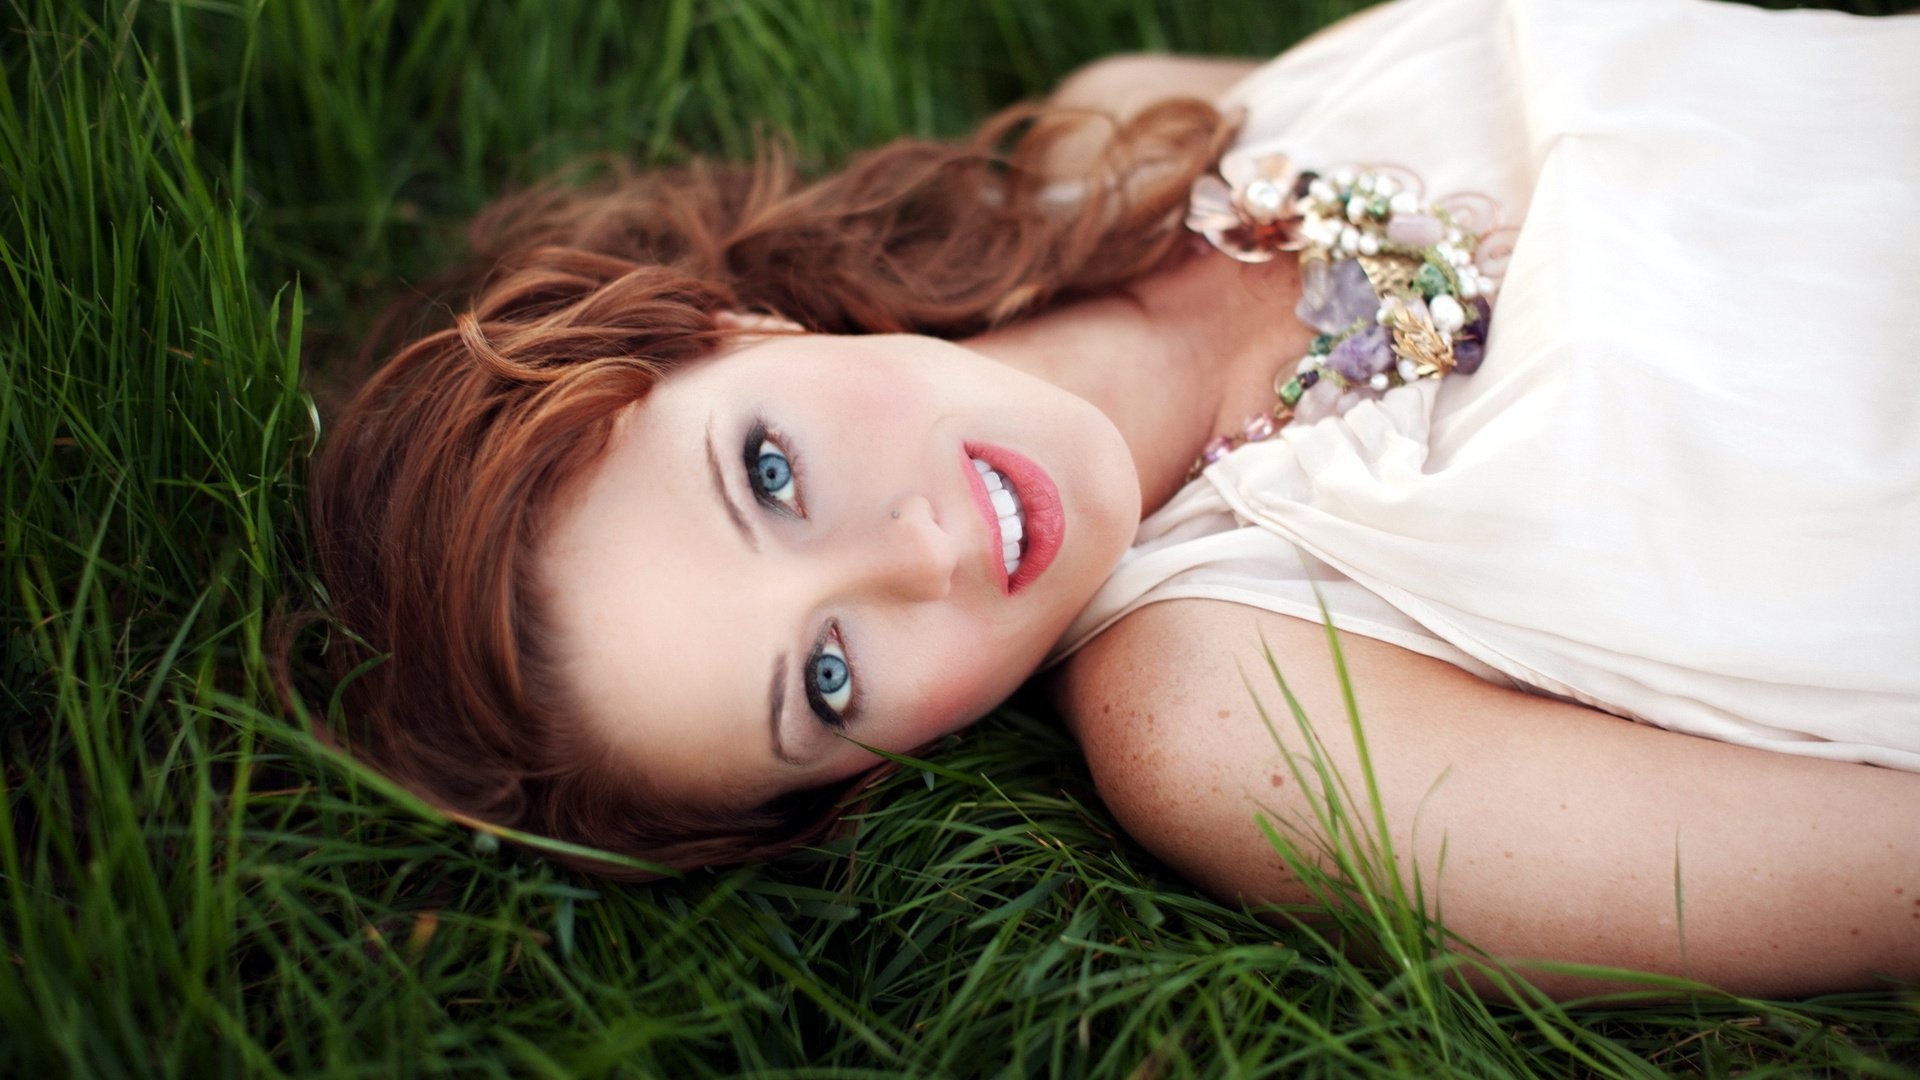 women model long hair women outdoors smiling blue eyes white dress grass redhead pierced nose open mouth Wallpaper